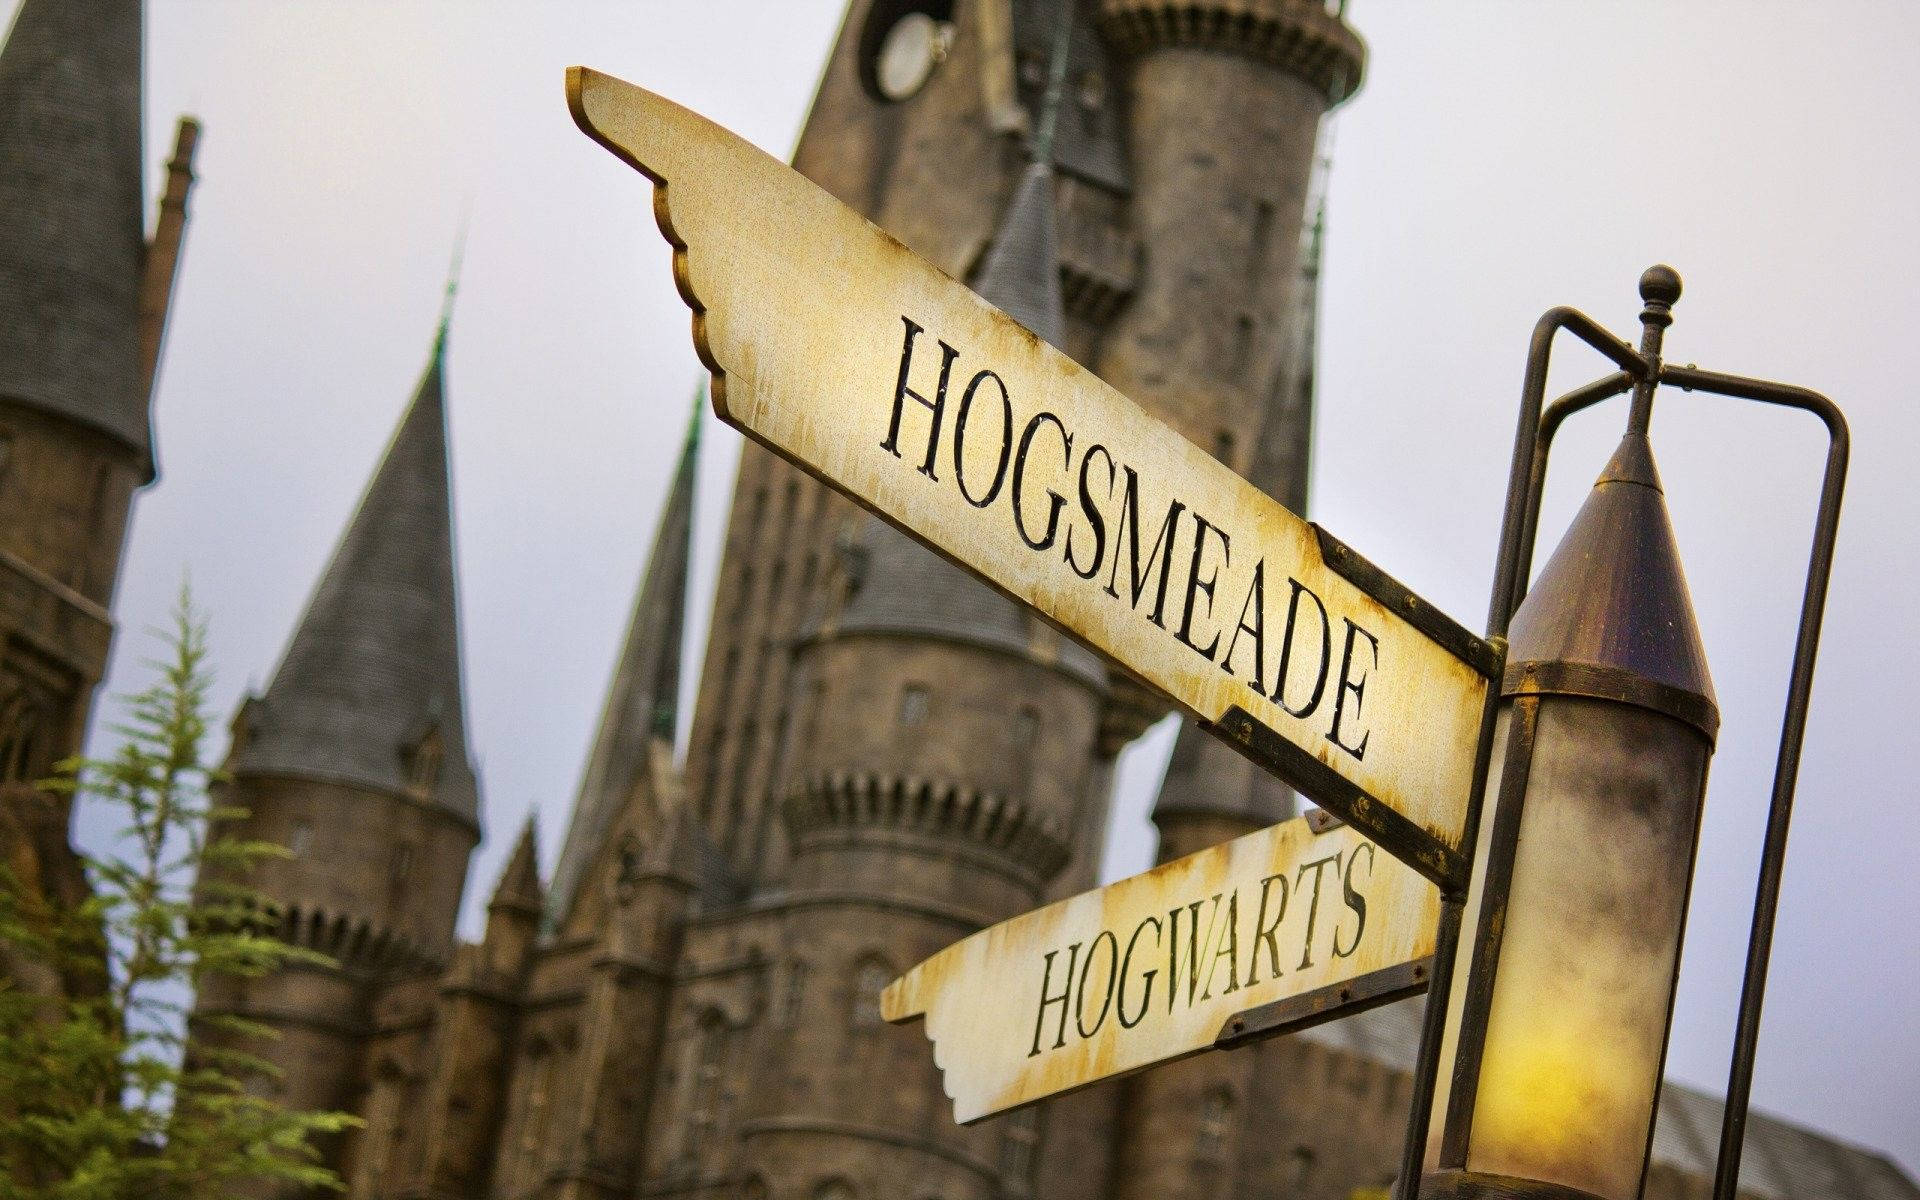 Download Hp Hogsmeade Hogwarts Aesthetic Street Sign Wallpaper